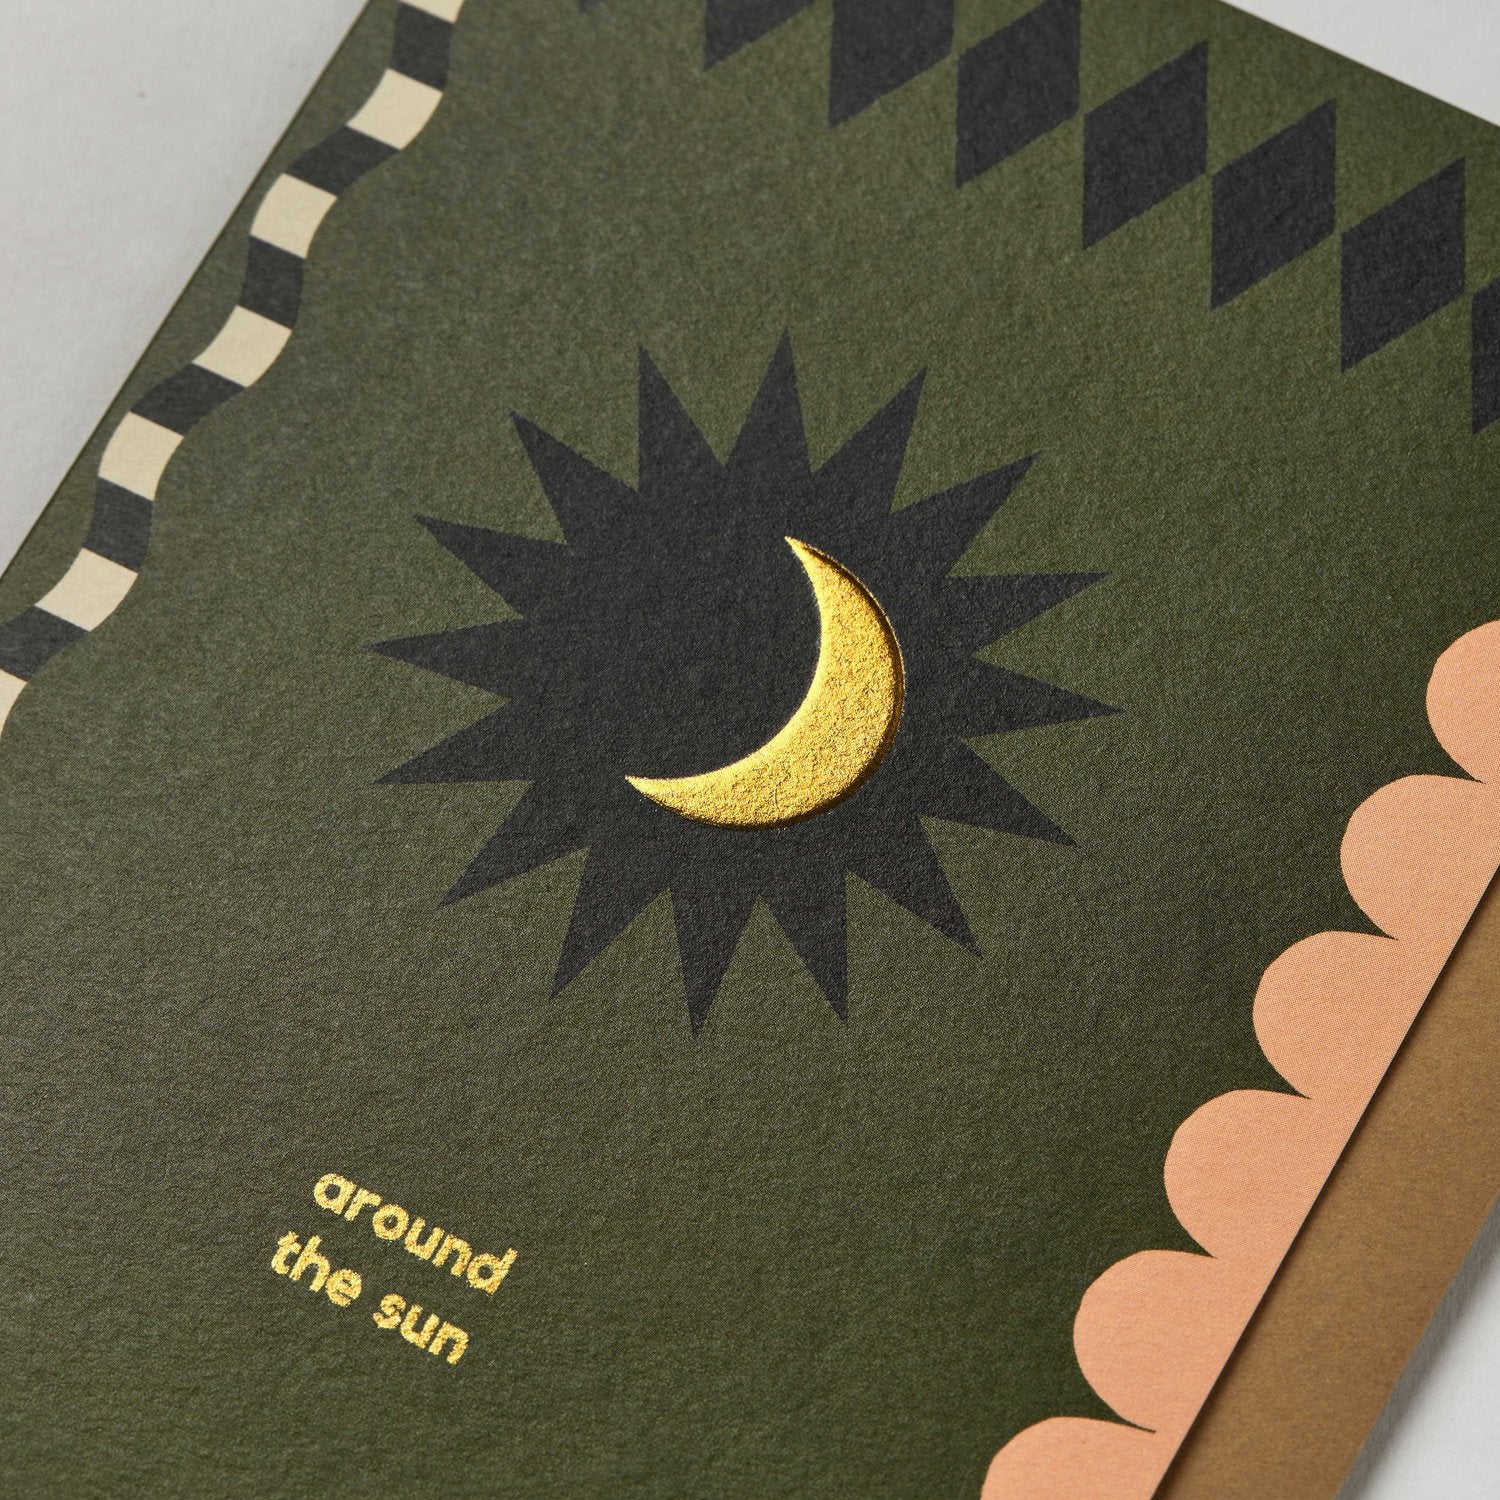 Around The Sun Card | Blank Inside | by Kinshipped - Lifestory